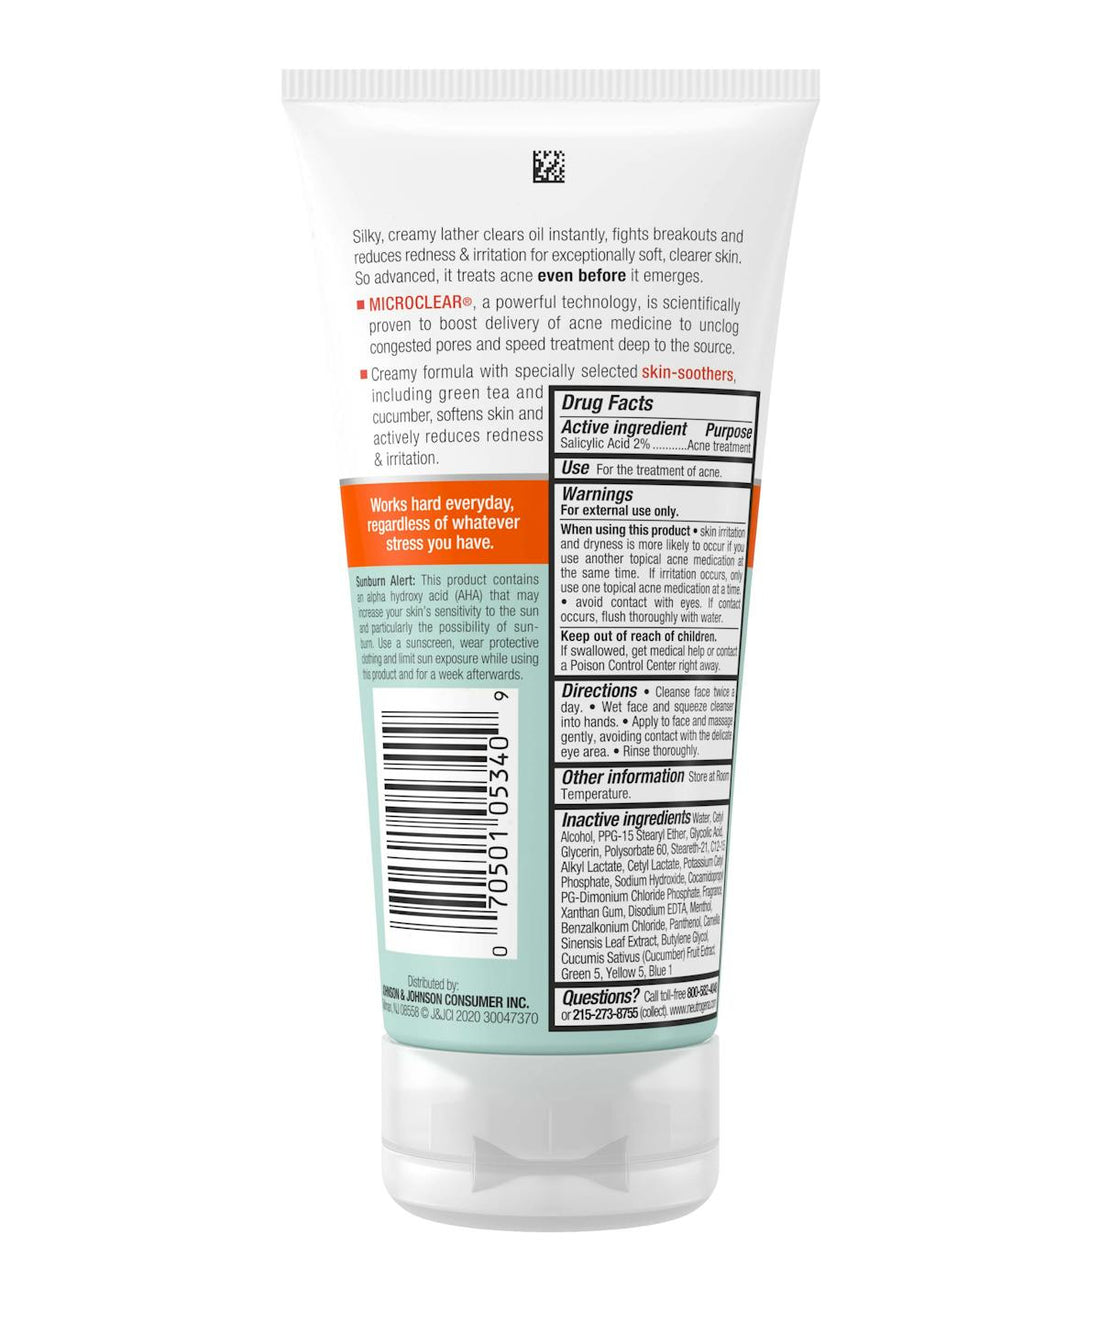 Oil Free Acne Stress Control power- Cream Wash (177ml)- Neutrogena.